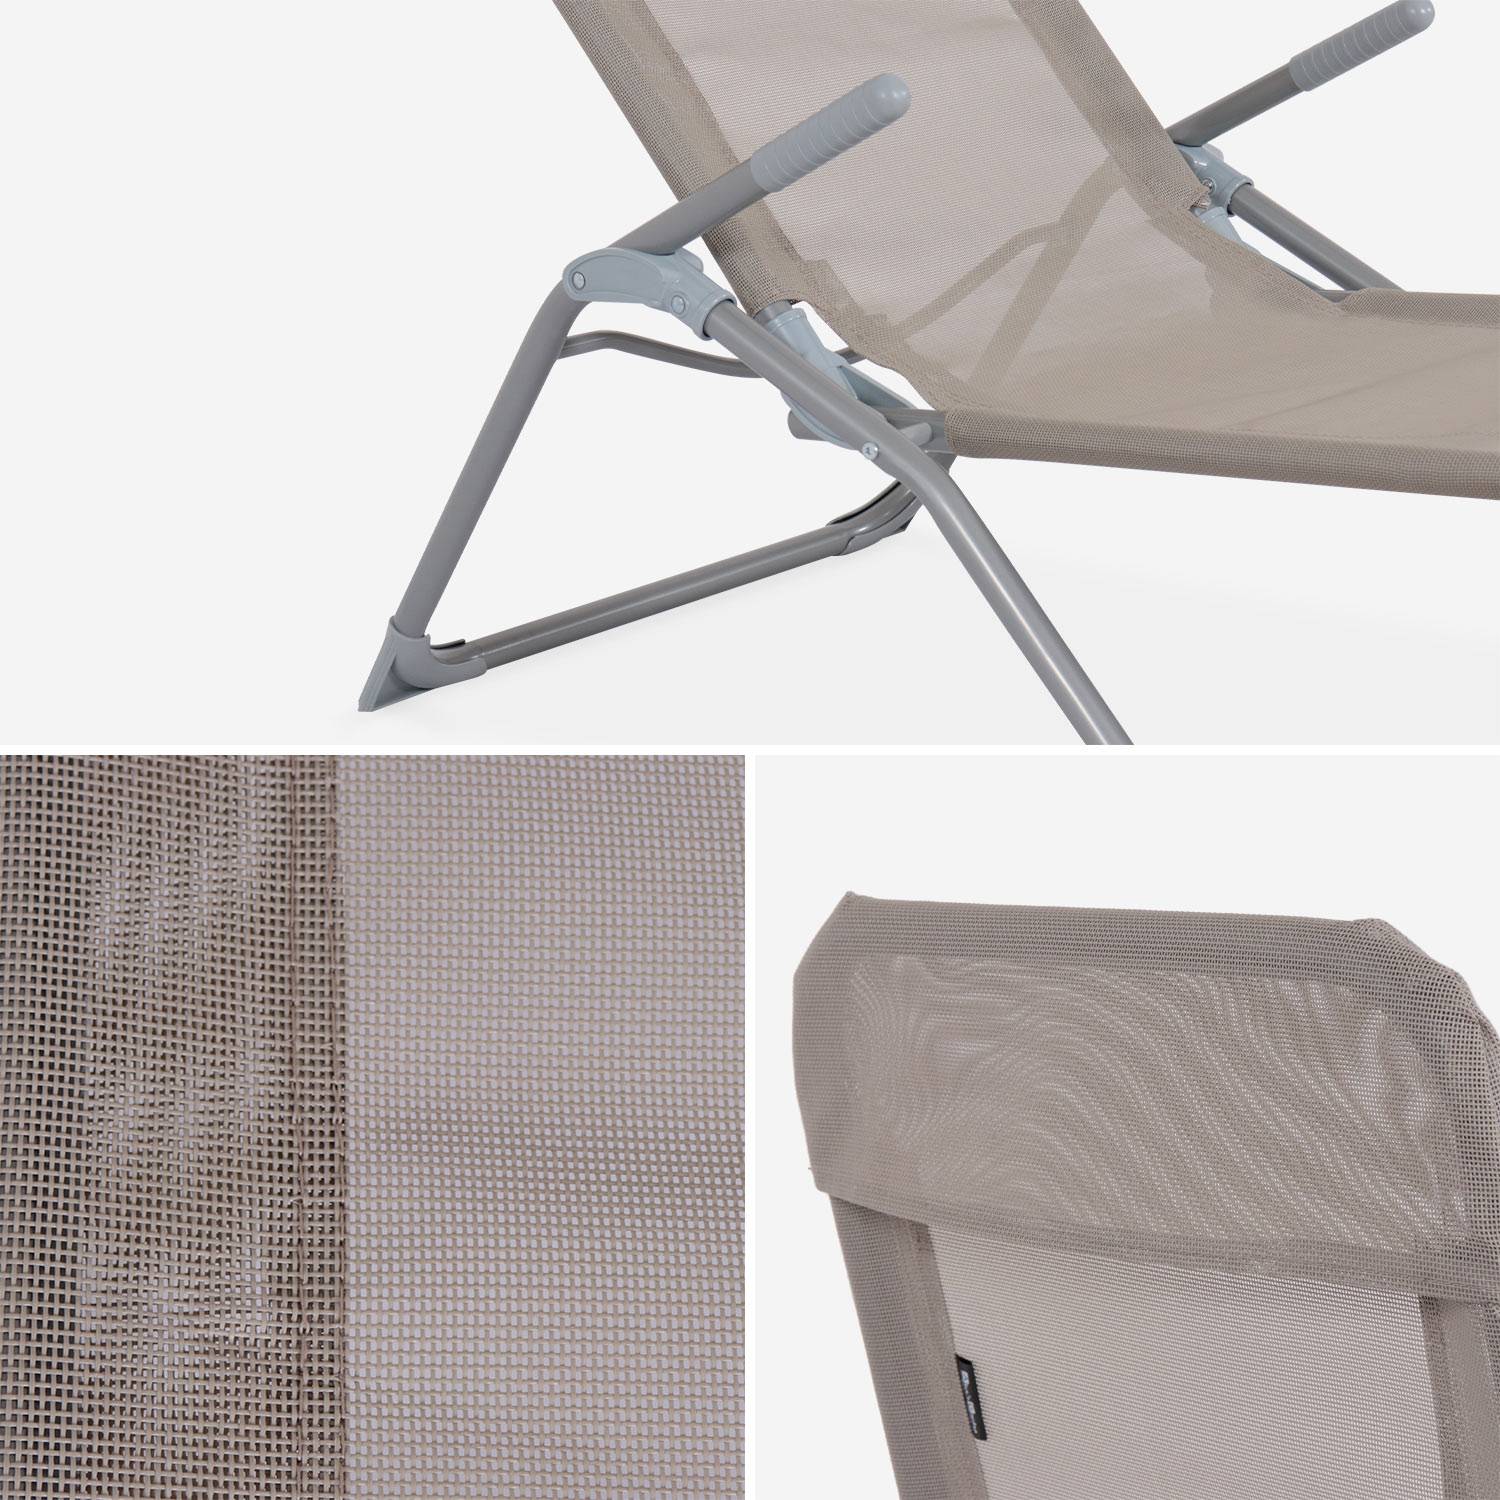 Set van 2 opvouwbare ligstoelen - Levito Taupe - Ligstoelen van textileen, 2 posities, opvouwbare ligstoelen Photo4